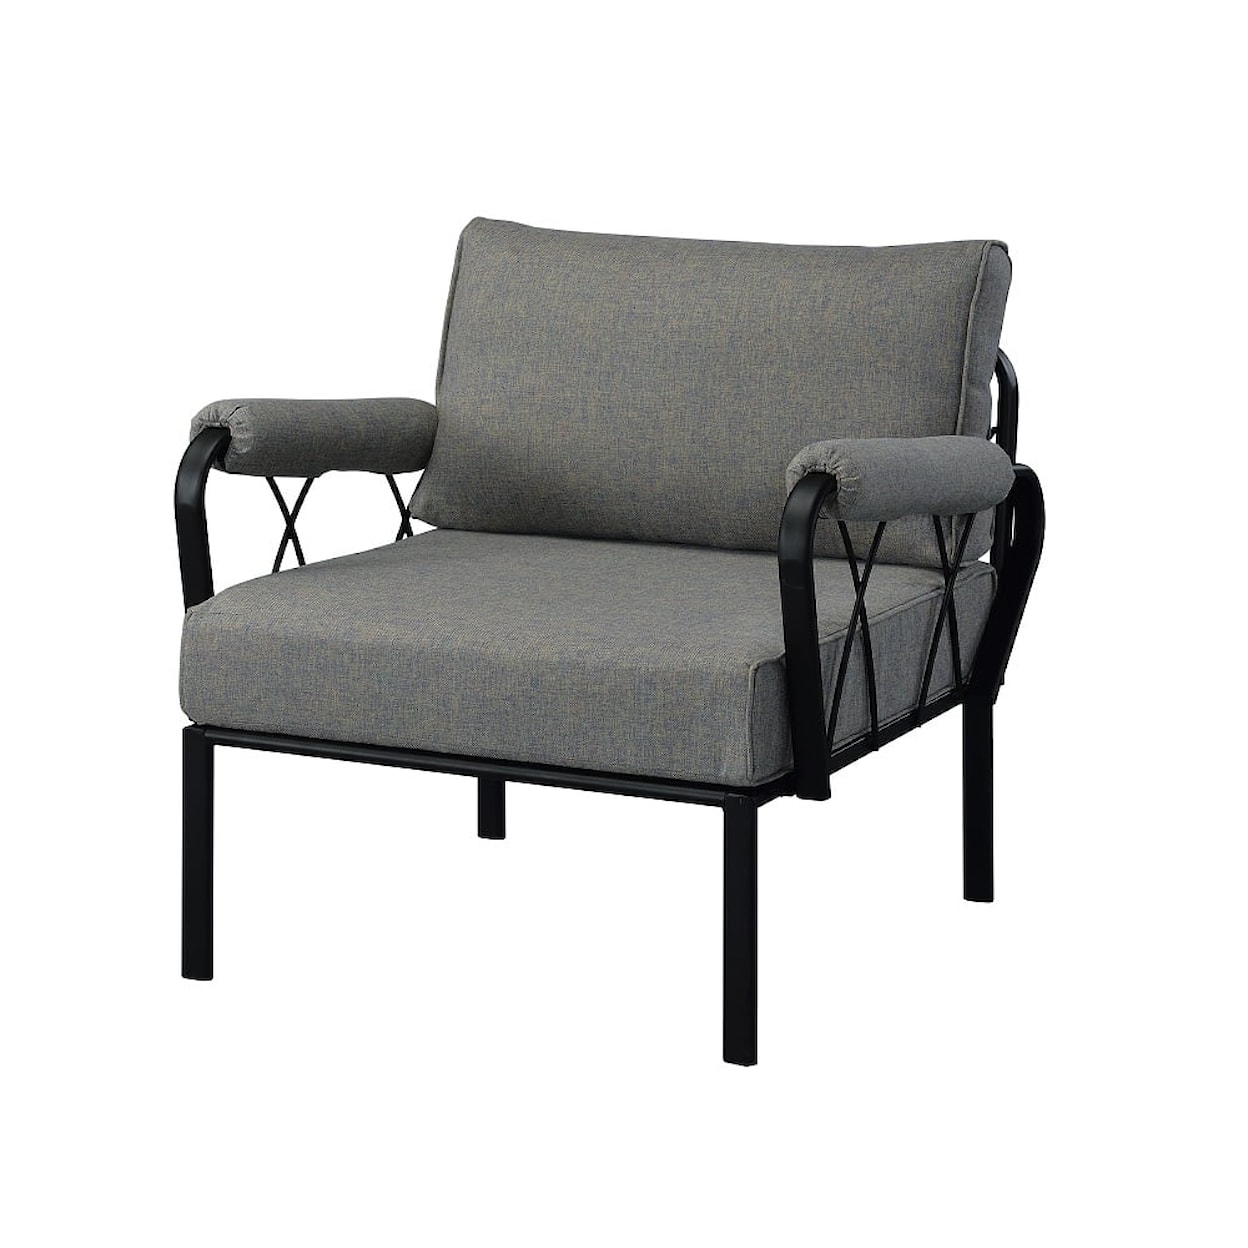 Acme Furniture Rajni Patio Arm Chair